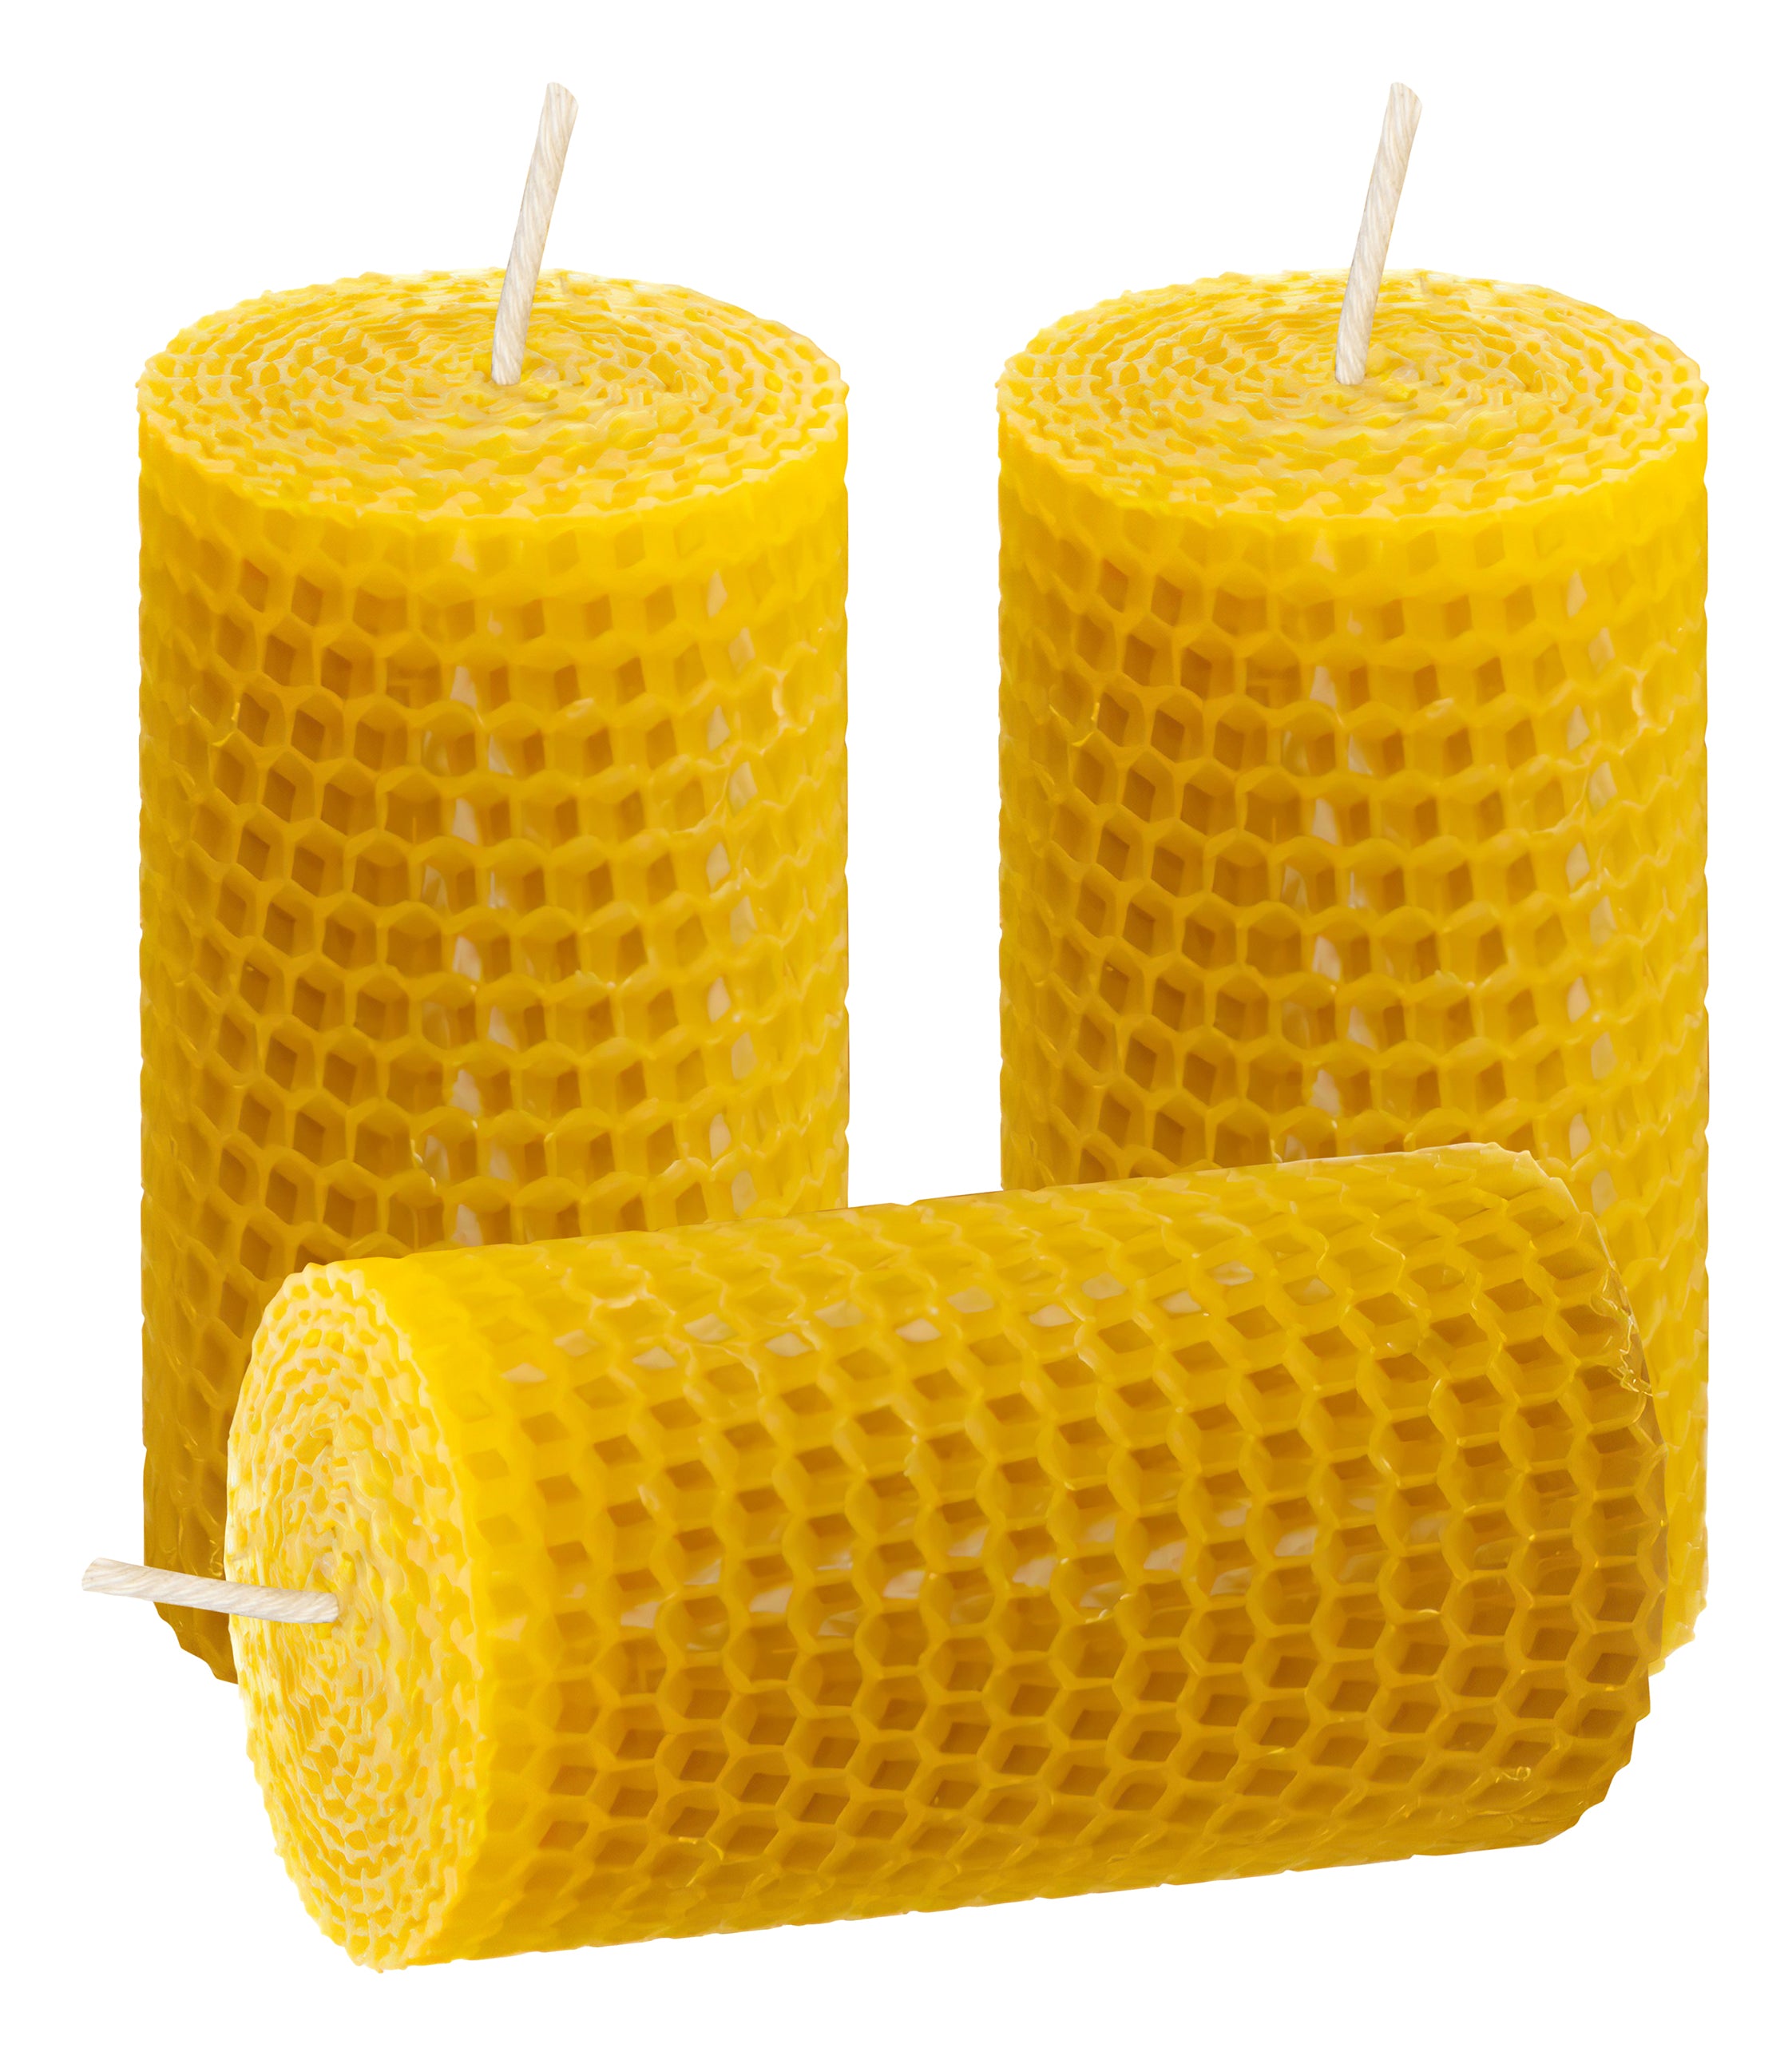 CandleScience Yellow Beeswax 5 lb Bag